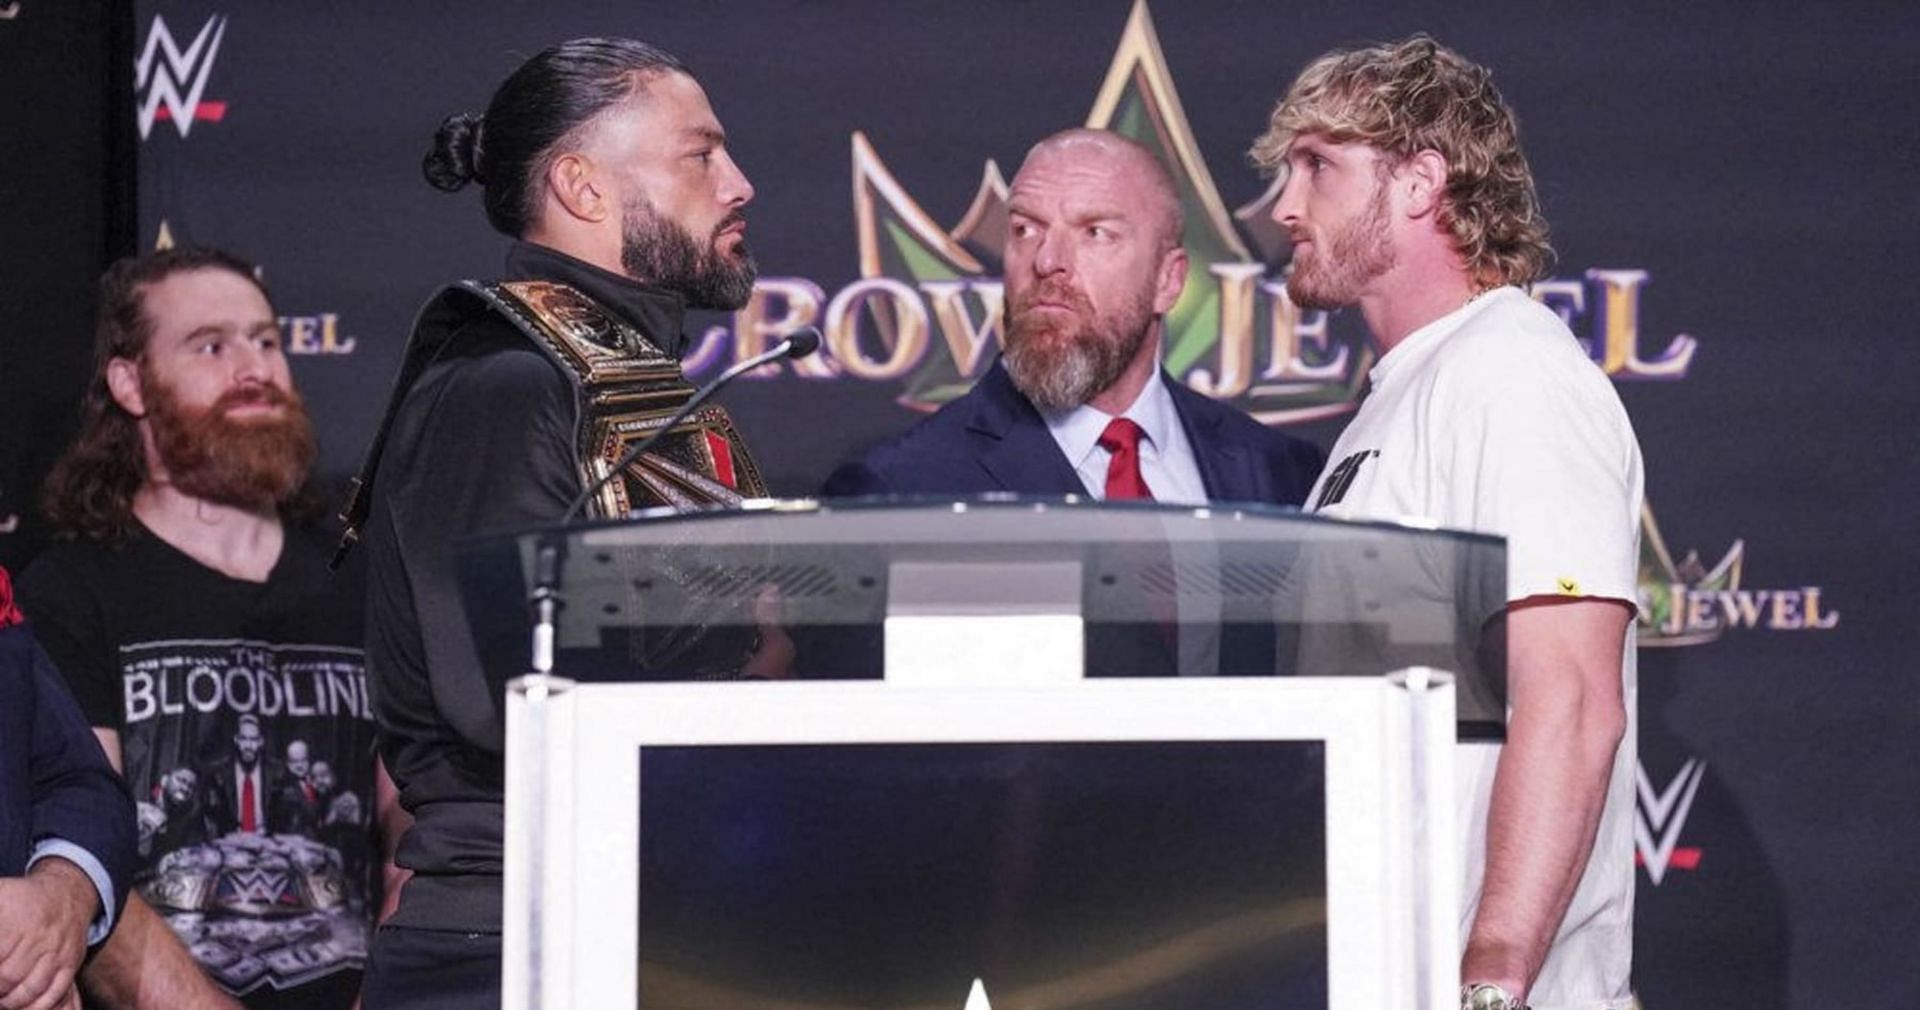 Roman Reigns looks to quiet the brash Logan Paul at WWE Crown Jewel.